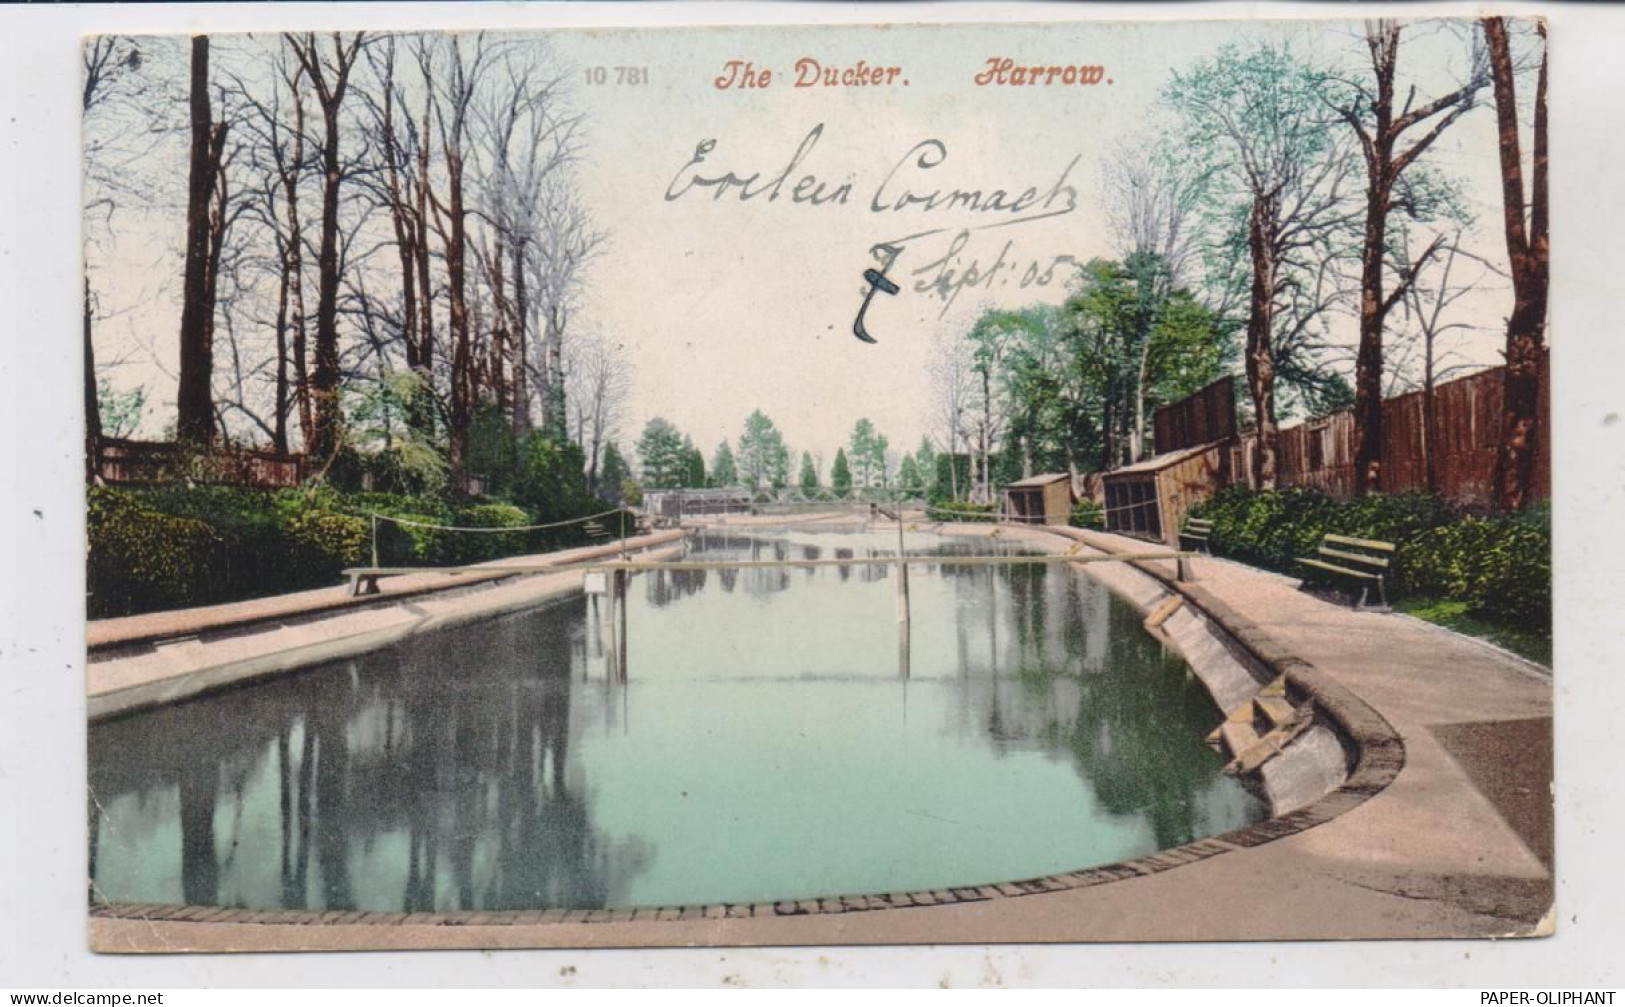 UK - ENGLAND - LONDON-HARROW, The Duker, 1905 - Middlesex